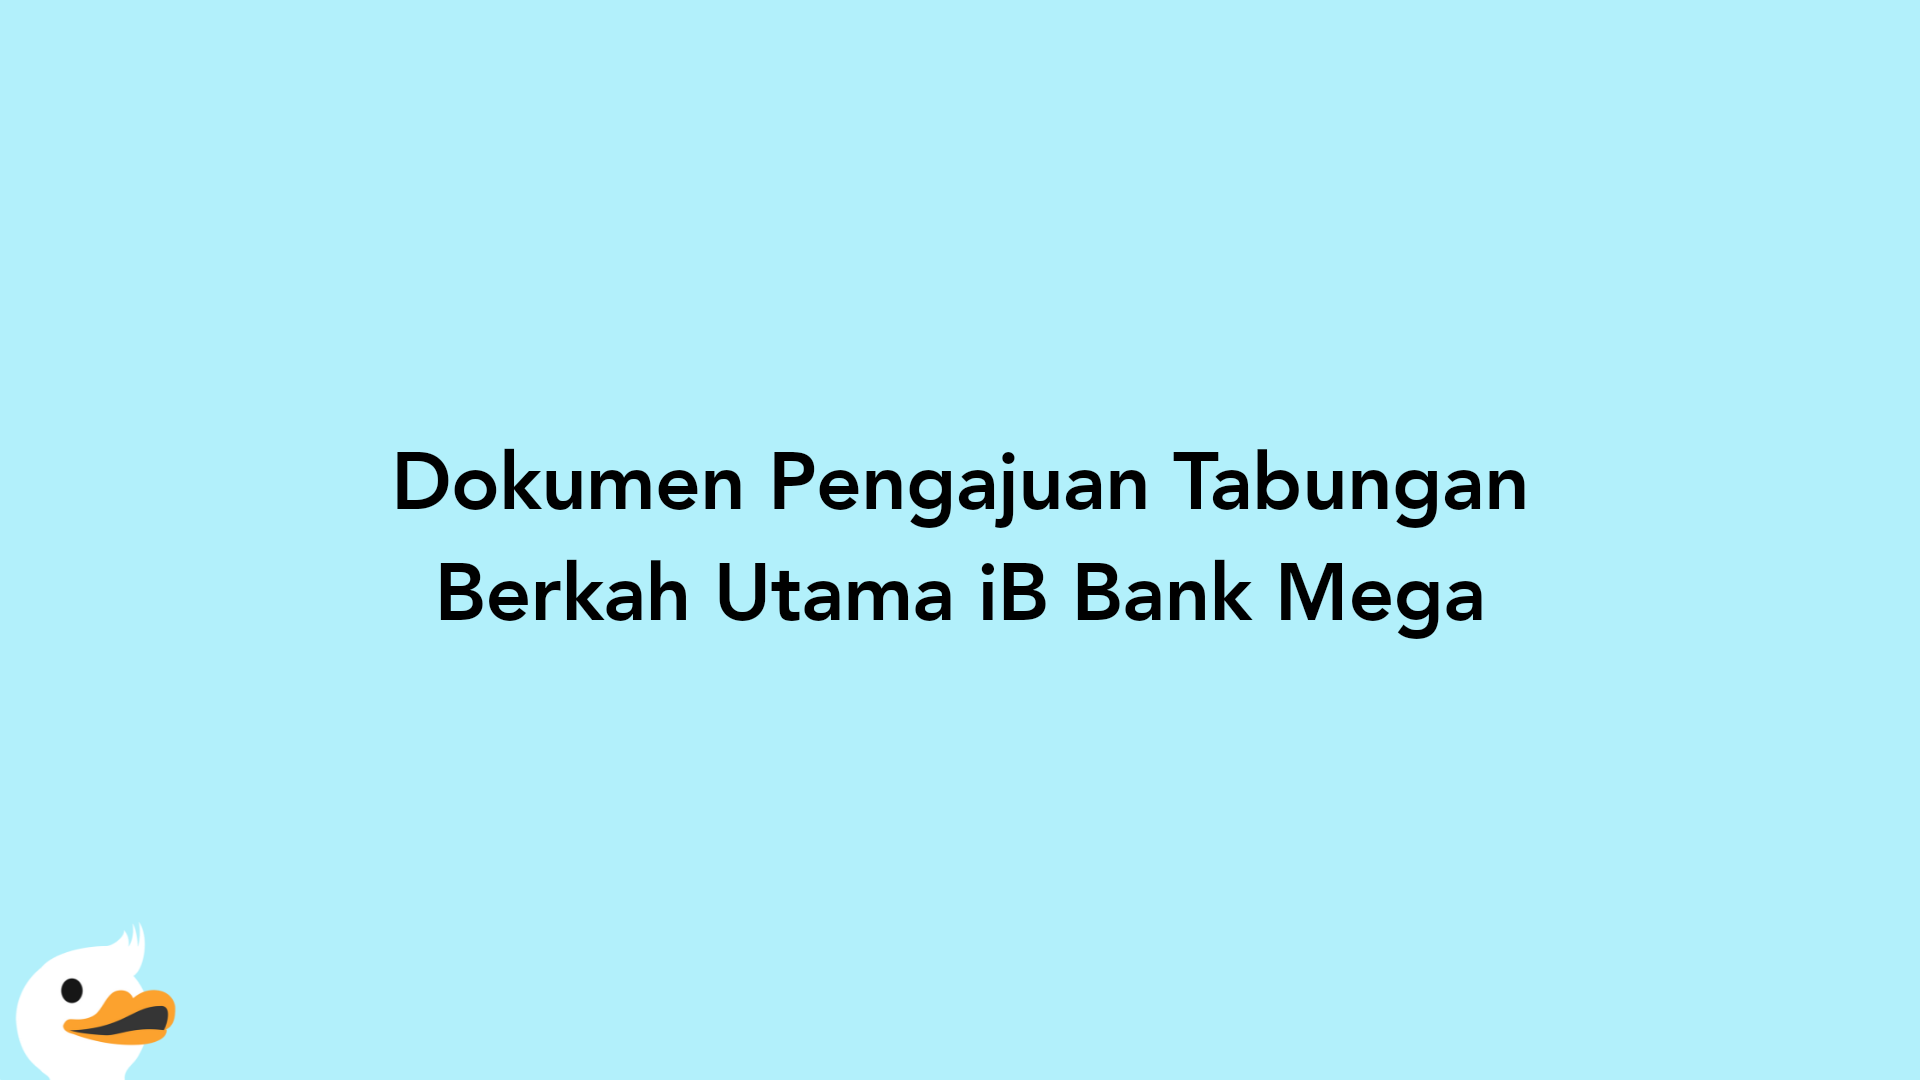 Dokumen Pengajuan Tabungan Berkah Utama iB Bank Mega